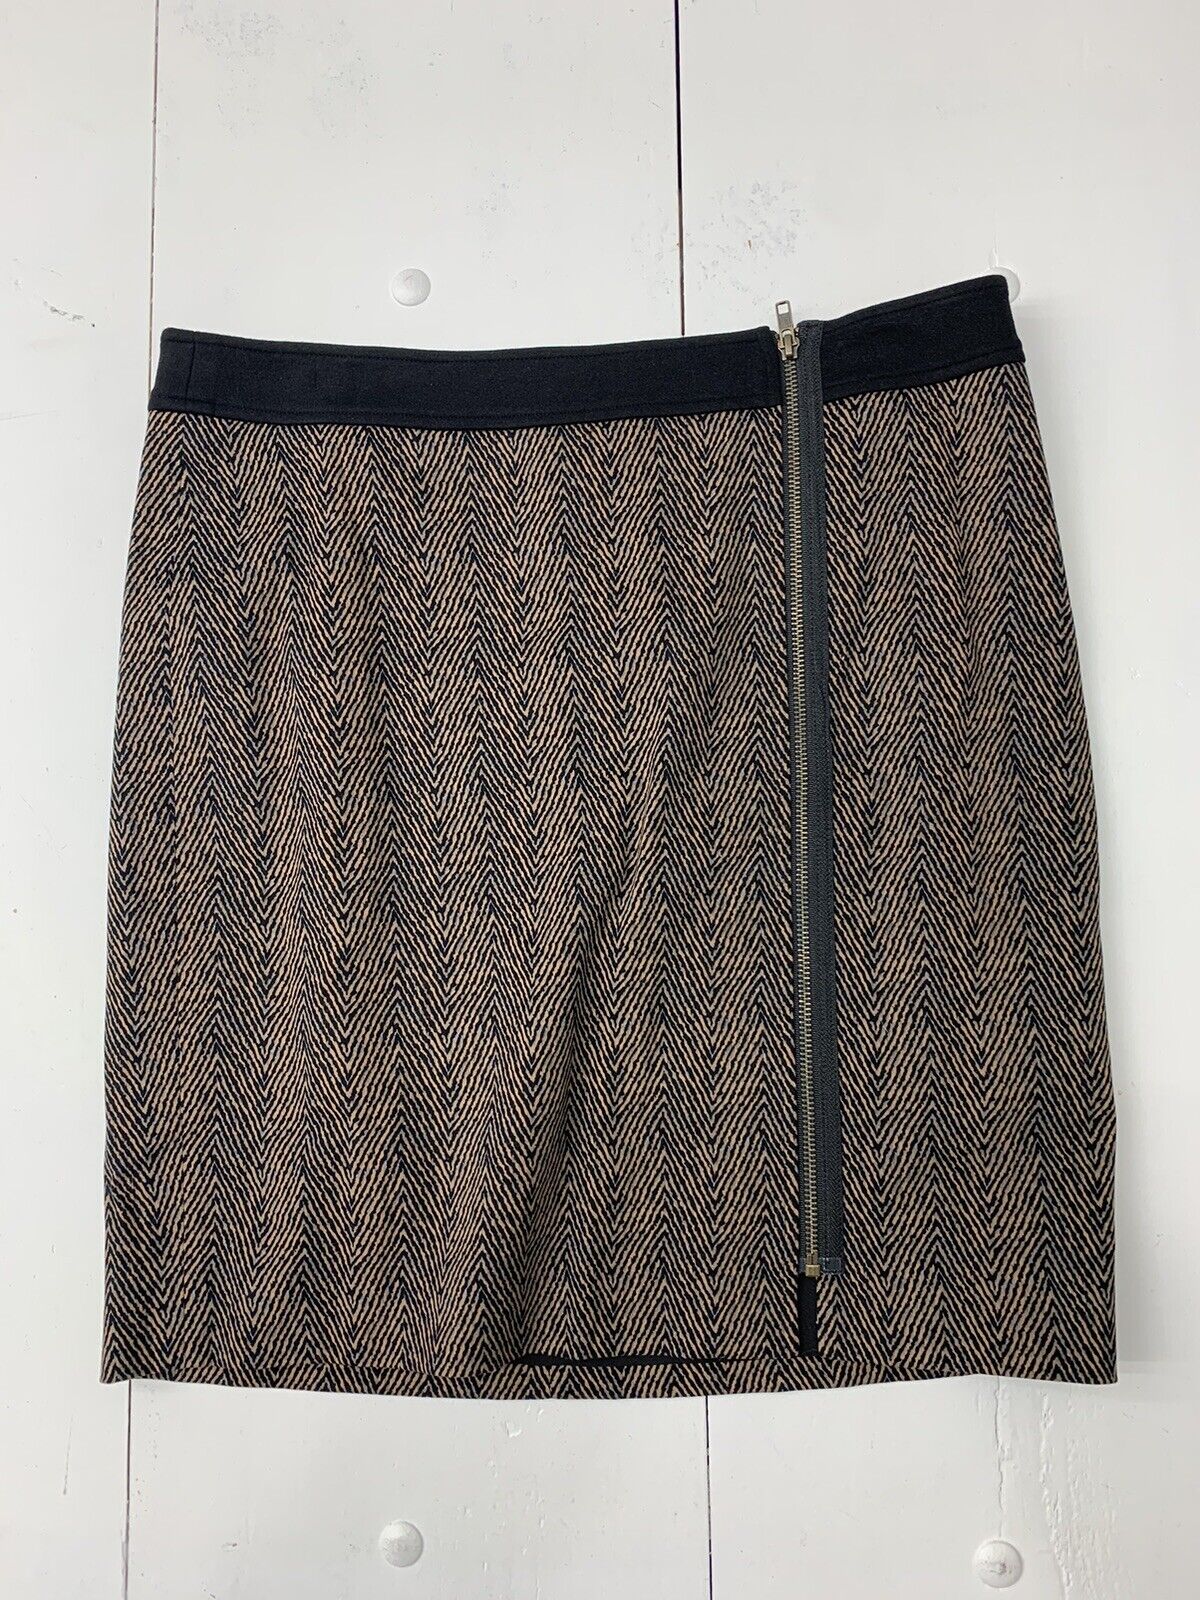 Donna Degnan Womens Brown Chevron Pront Skirt Size 12